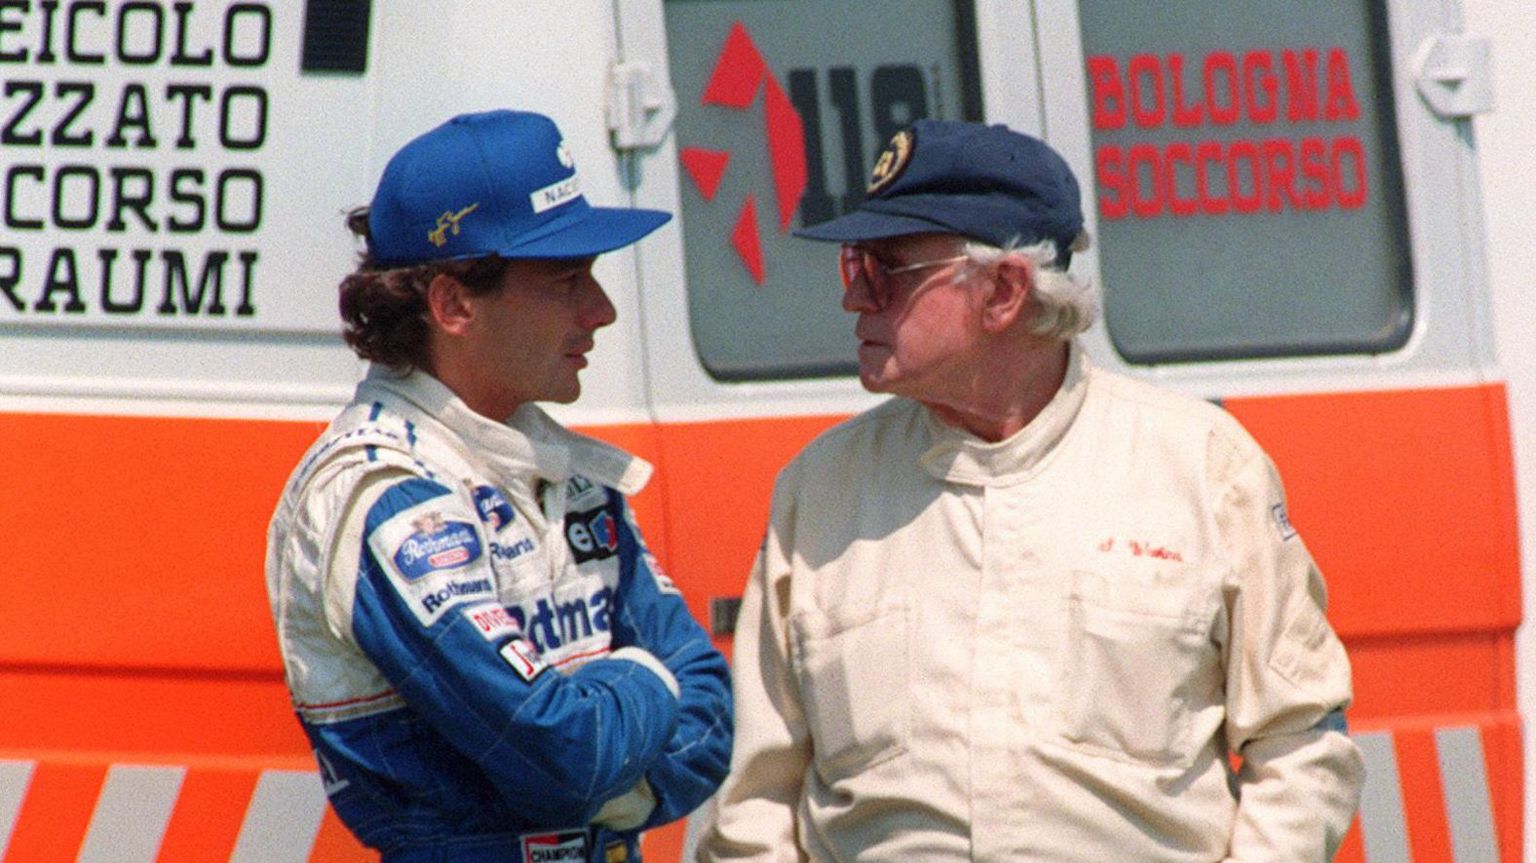 Aryton Senna and Sid Watkins in conversation in front of an ambulance at Imola